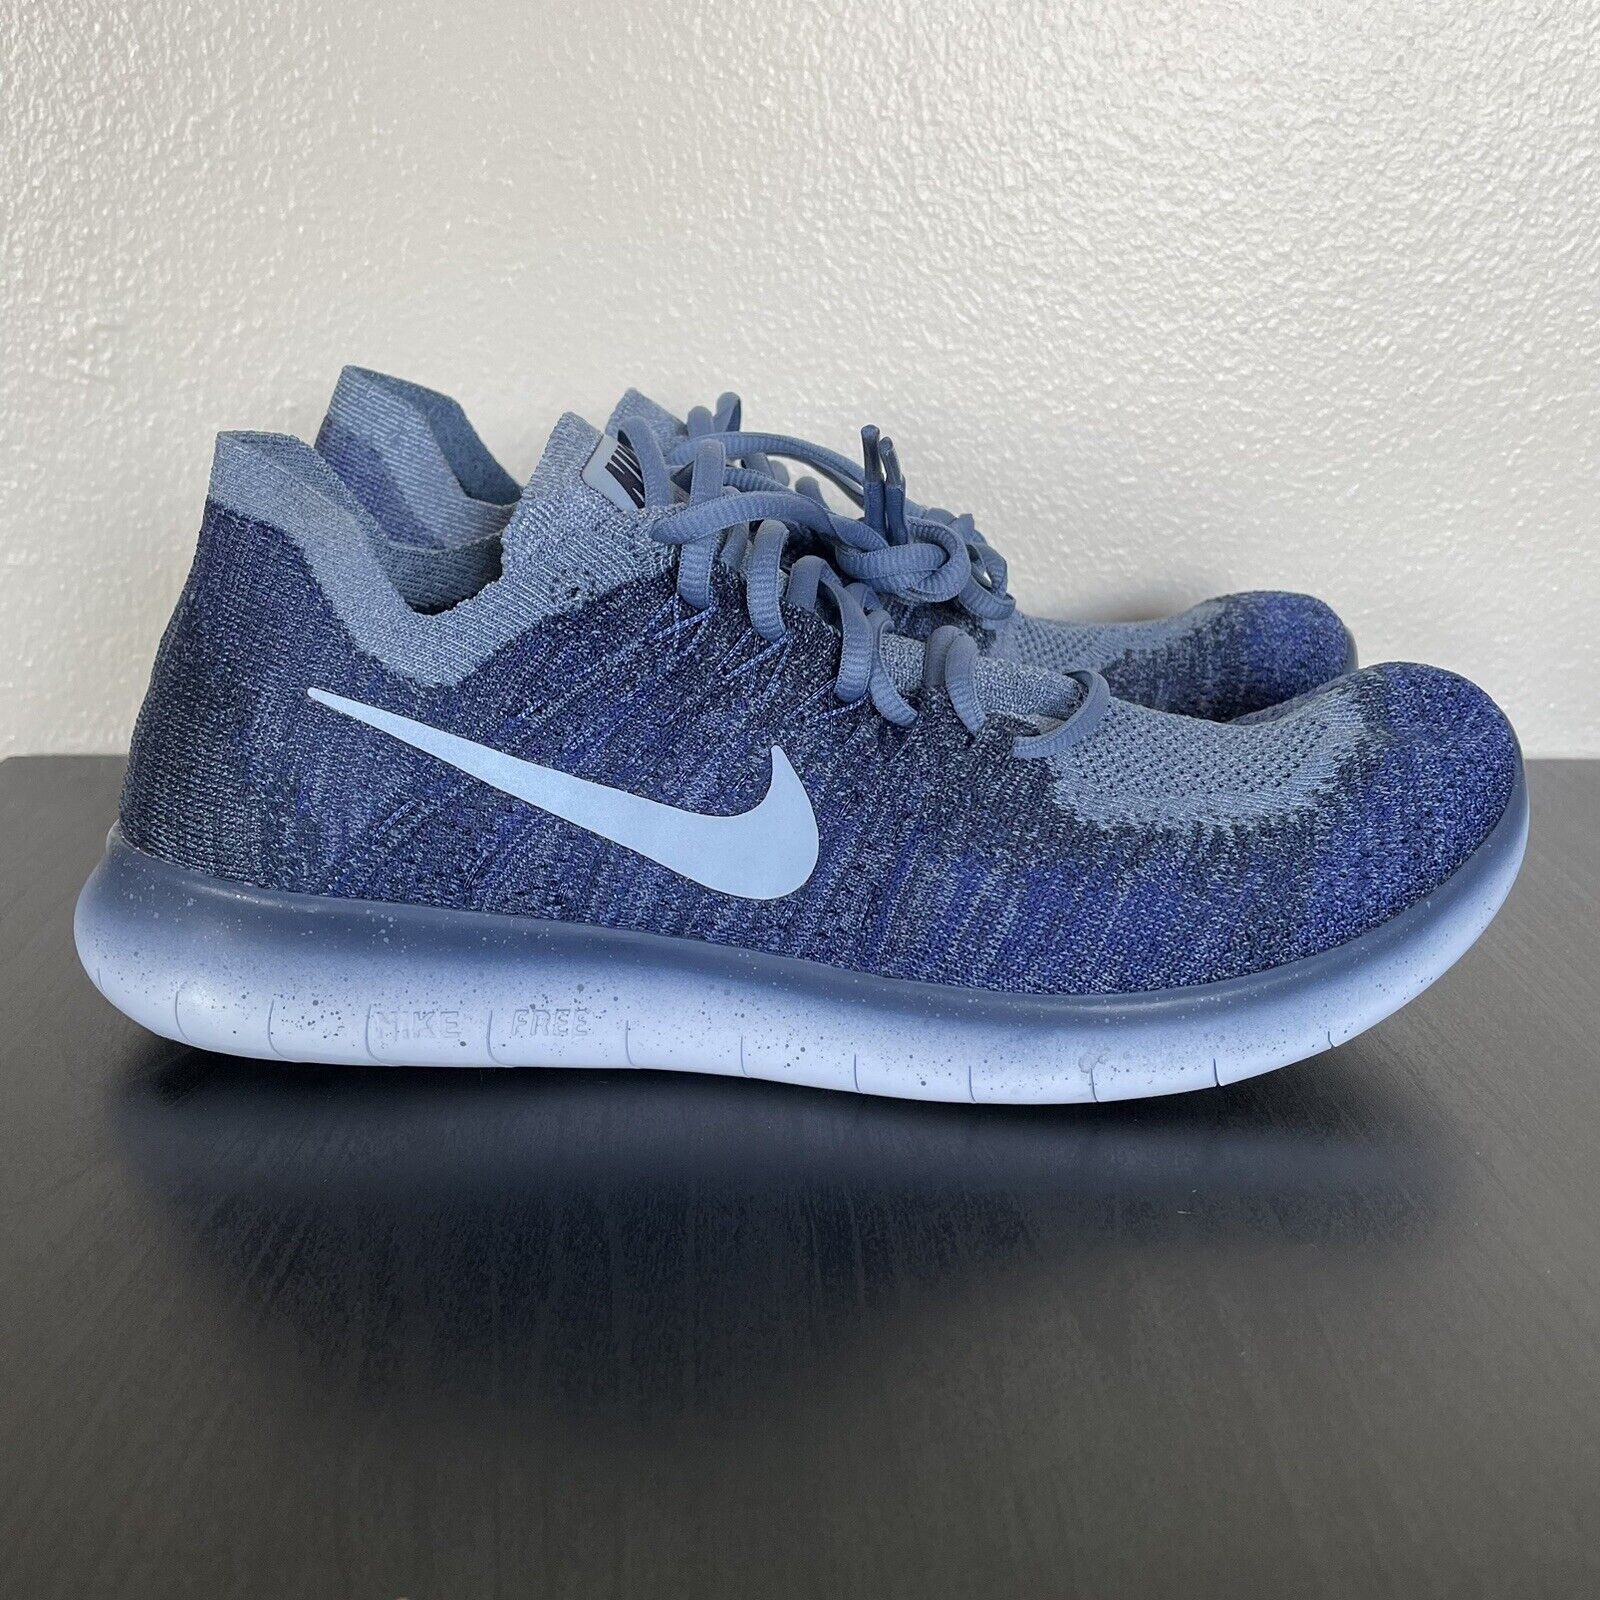 Astronave juicio promedio NEW Nike Free RN Flyknit Running Shoes Ocean Fog Blue 880843-404 Men's Size  10 | eBay